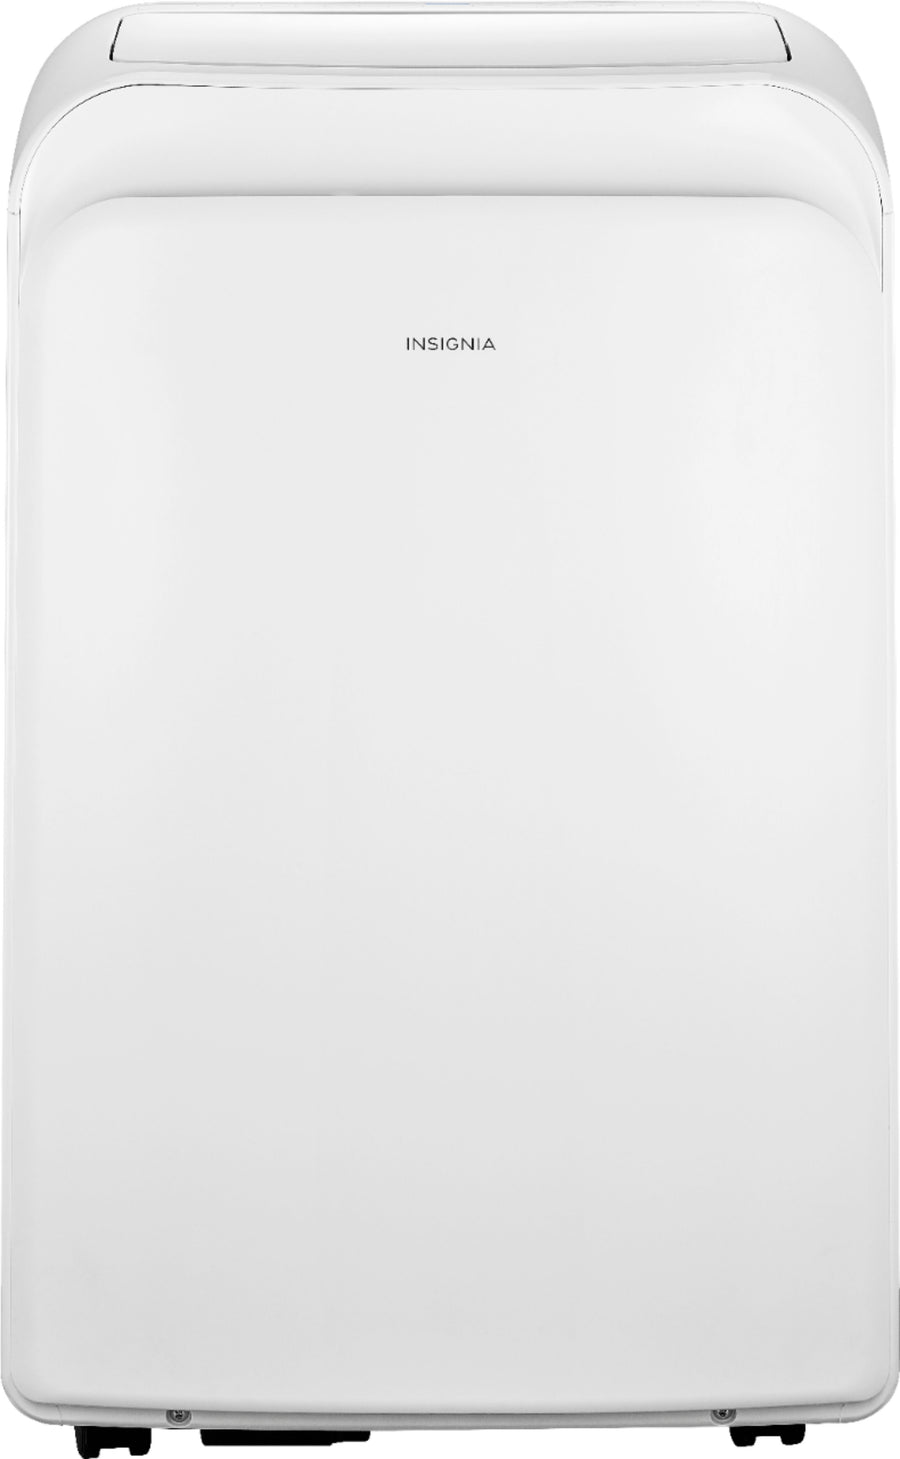 Insignia™ - 350 Sq. Ft. Portable Air Conditioner - White_0